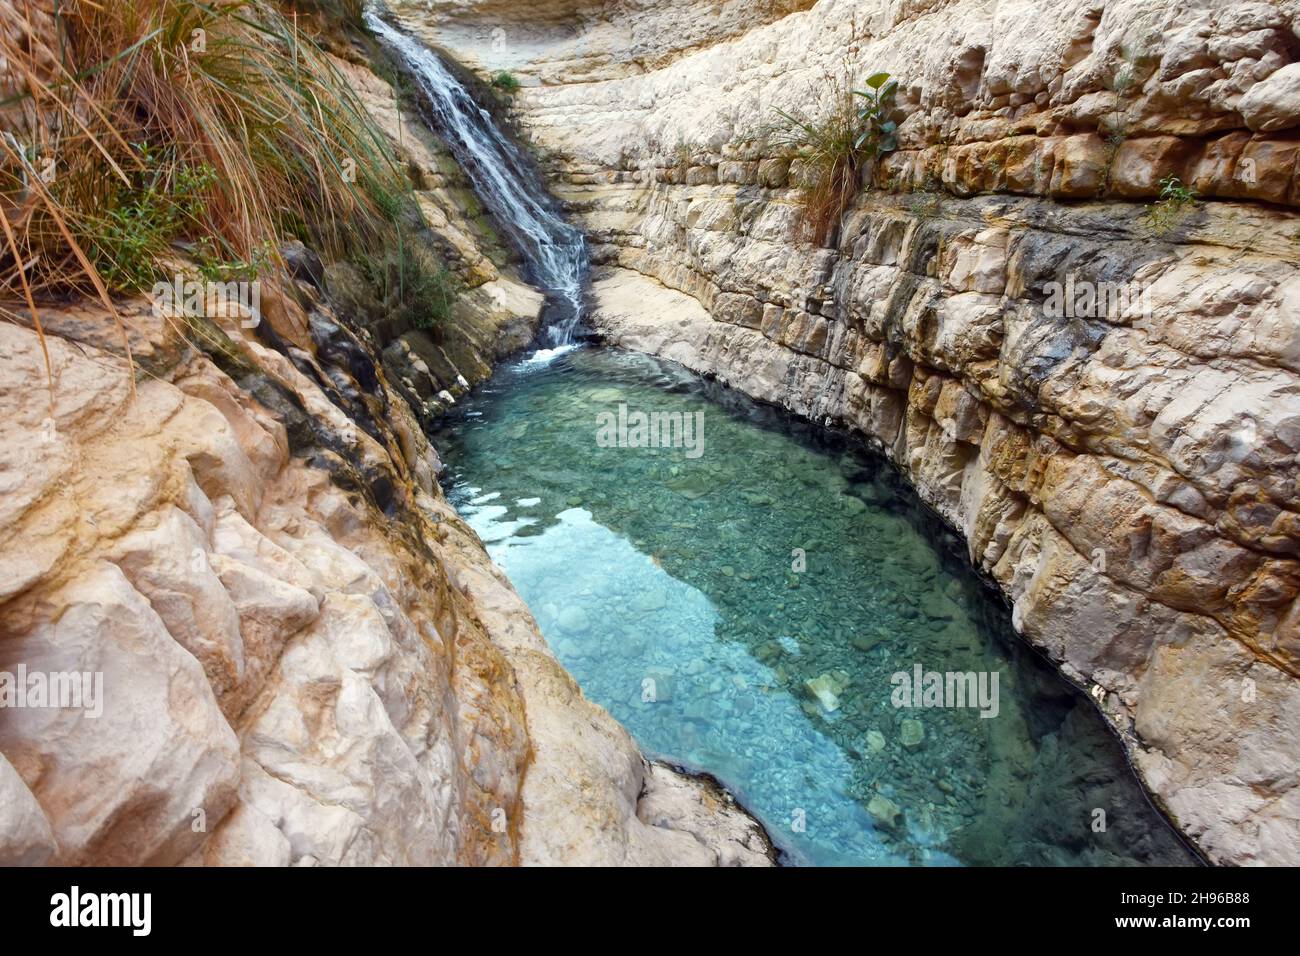 David waterfall and natural pool, Ein Gedi, Israel Stock Photo